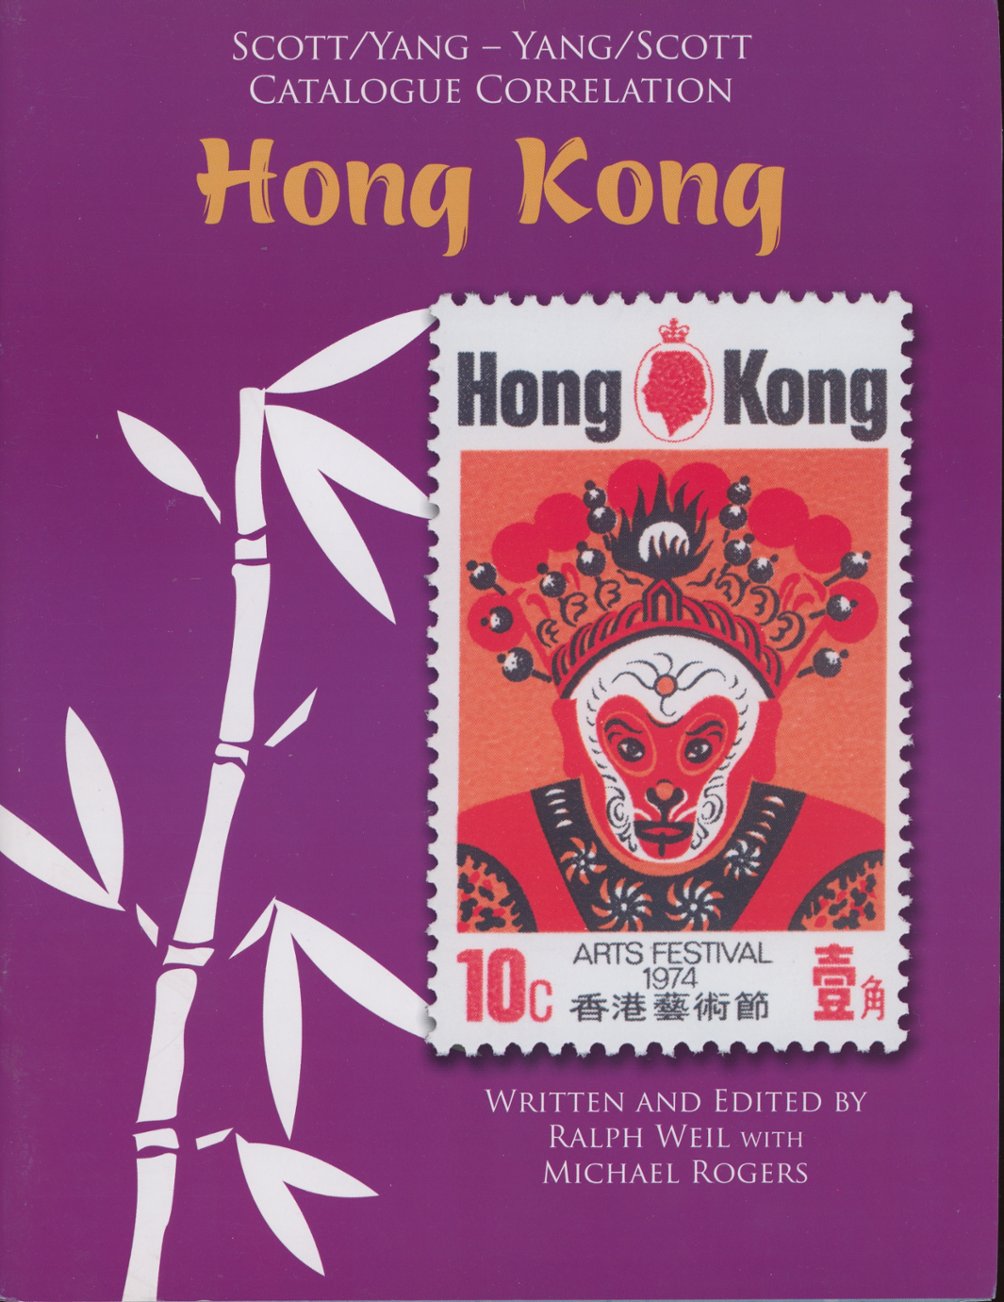 Scott/Yang-Yang/Scott Catalogue Correlation Hong Kong, Second ed., by Ralph Weil and Michael Rogers, 2006, as new (7 oz)